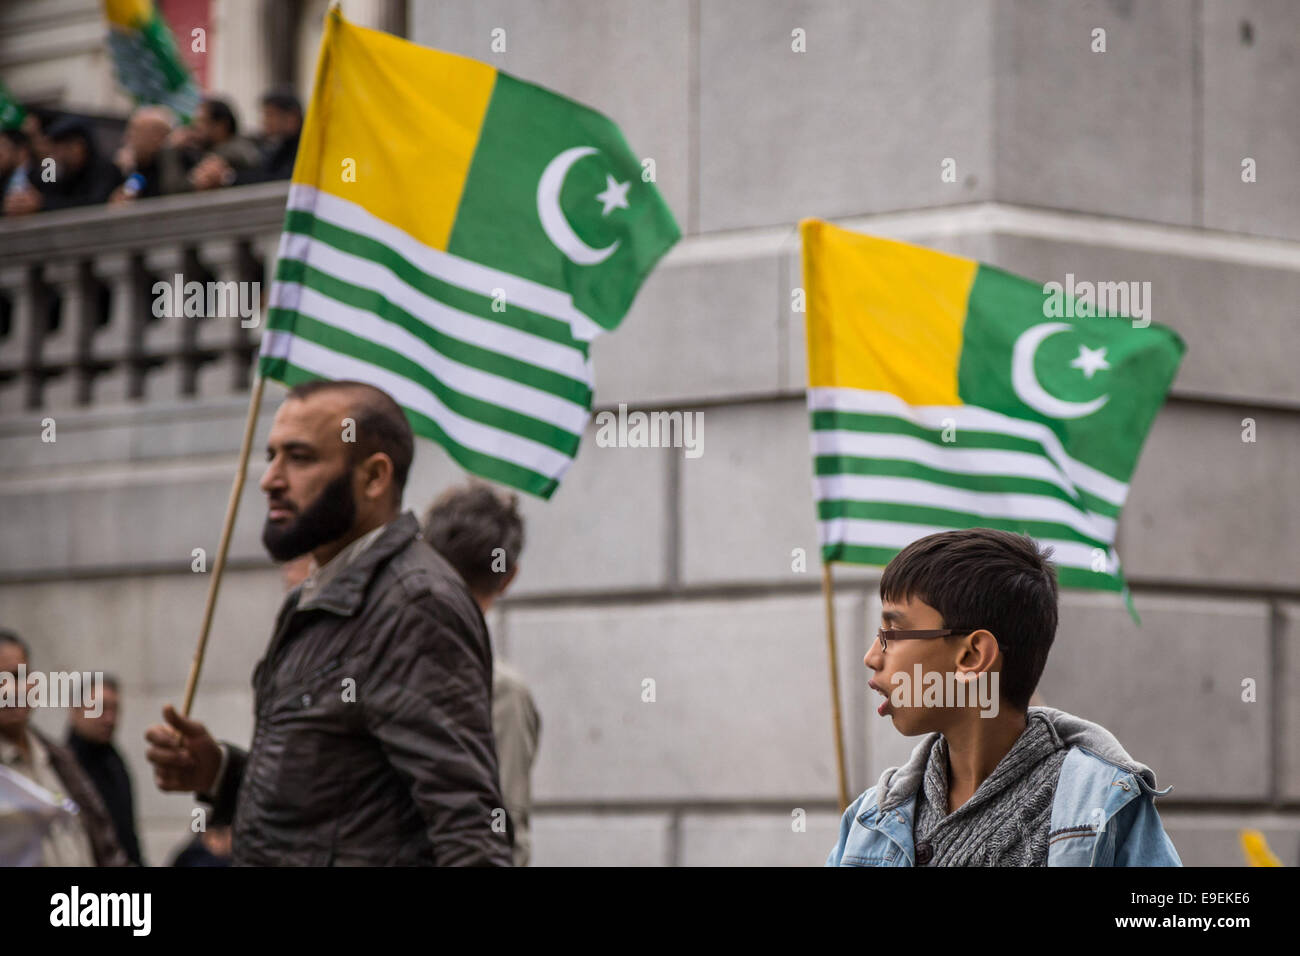 Londra, Regno Unito. 26 ott 2014. Pro-Kashmiri manifestanti in Trafalgar Square Credit: Guy Corbishley/Alamy Live News Foto Stock